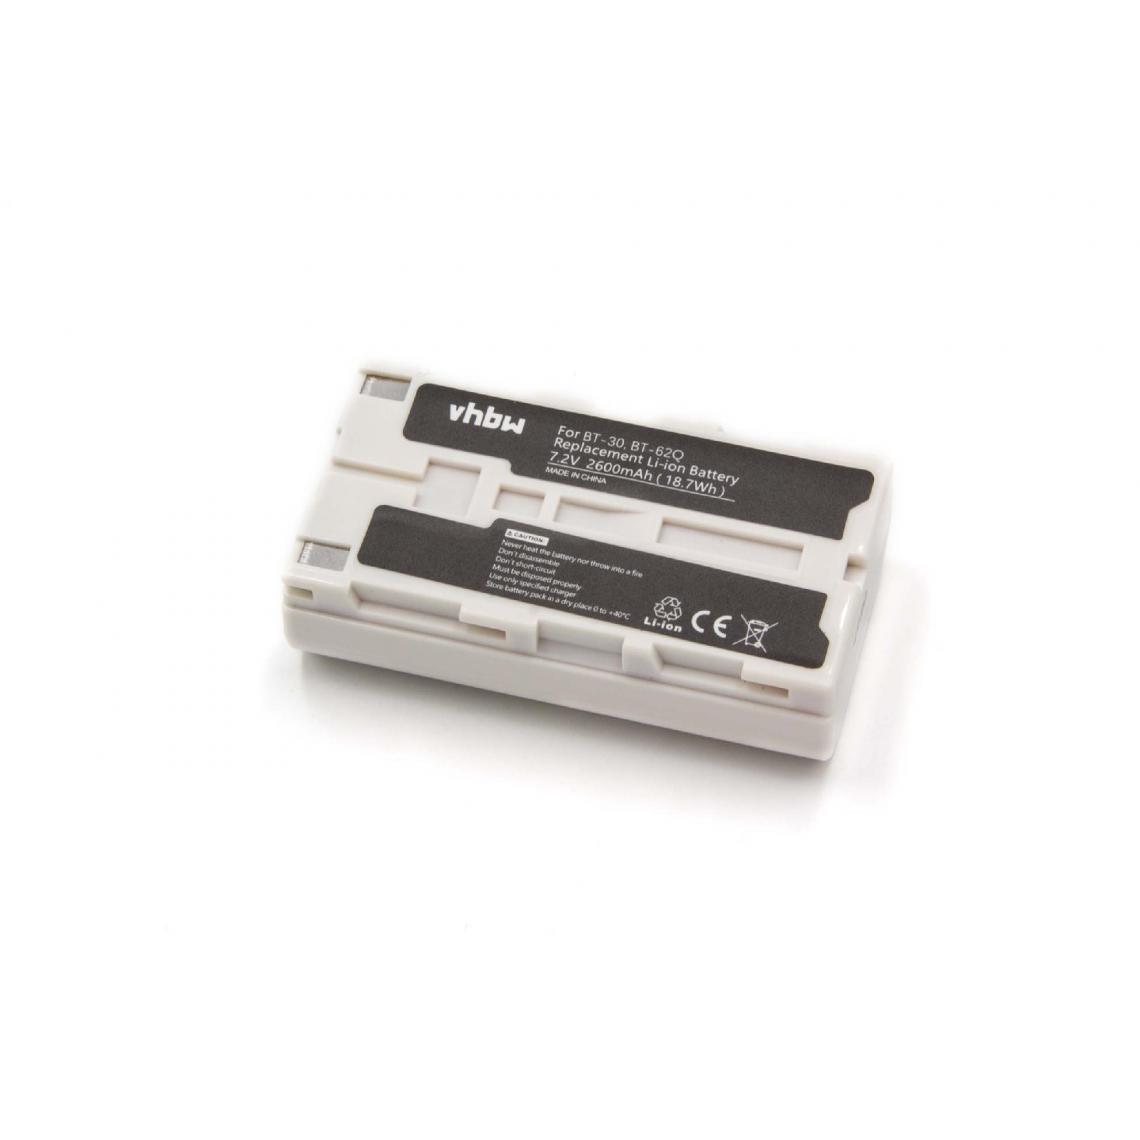 Vhbw - vhbw Batterie compatible avec Topcon Field Controller GRS-1, GTS-750, GTS-751, GTS-900, RC-3 outil de mesure (2600mAh, 7,4V, Li-ion) - Piles rechargeables